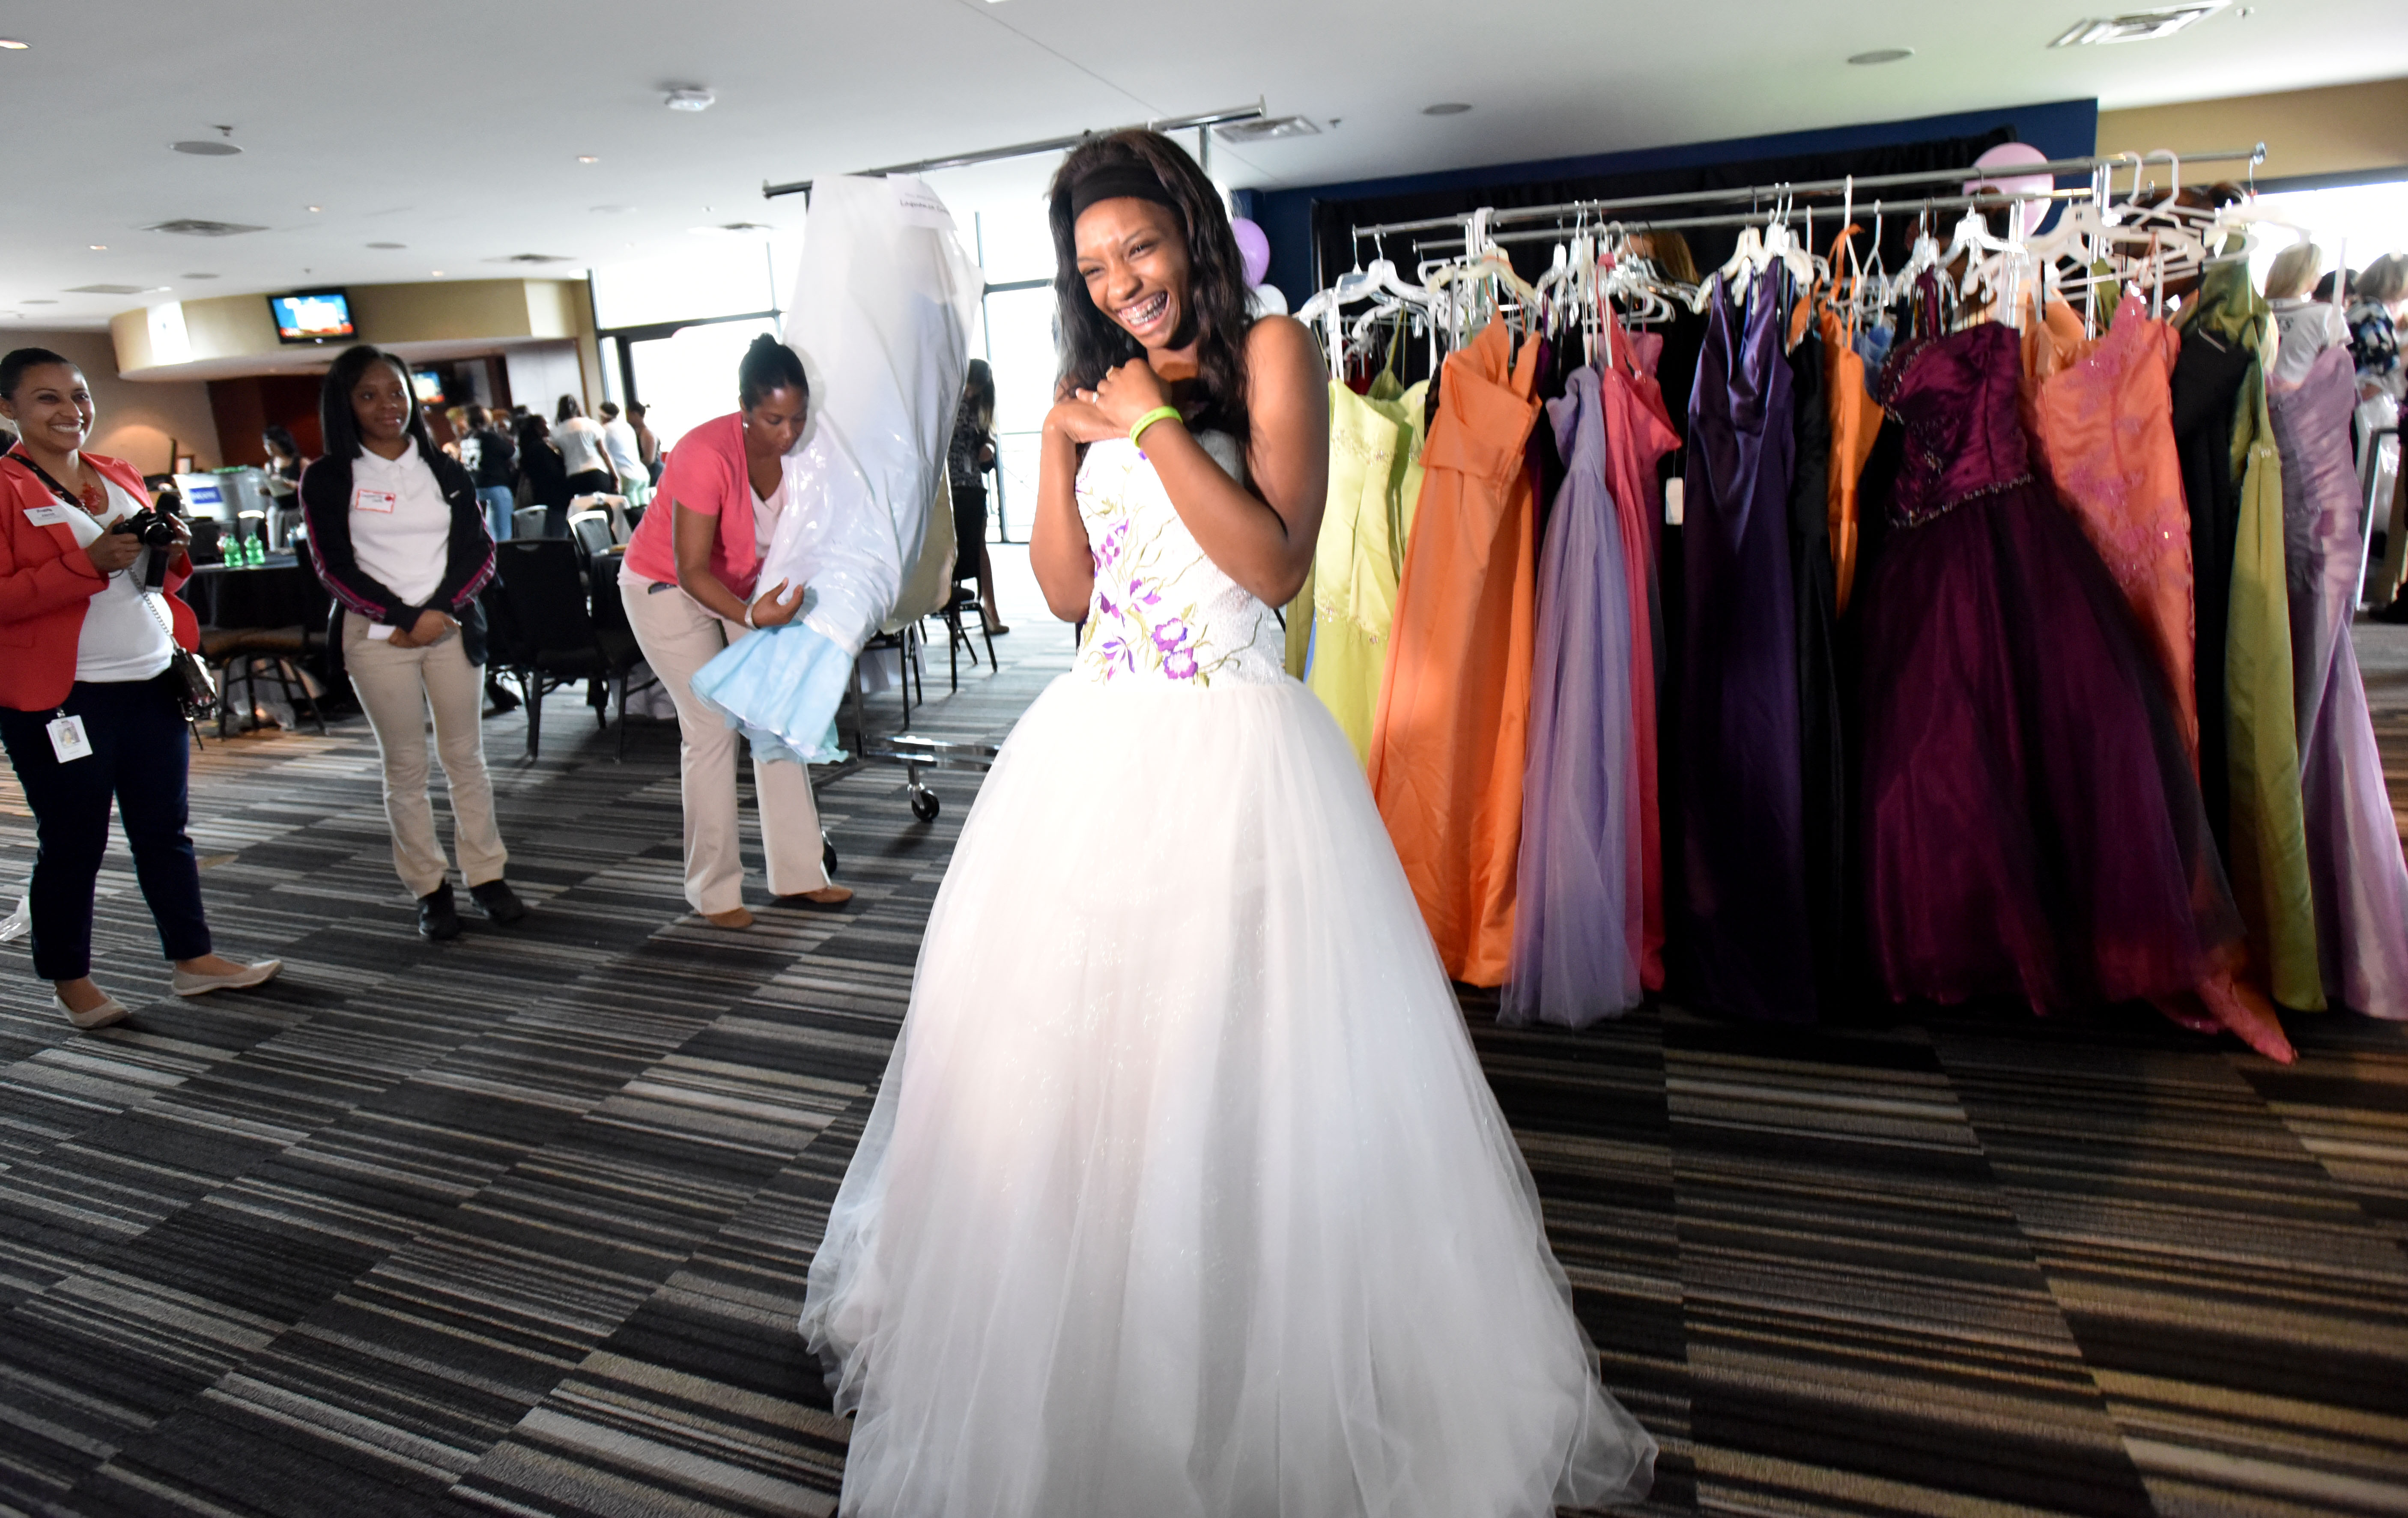 Photos: Atlanta Braves wives, girlfriends host prom makeover